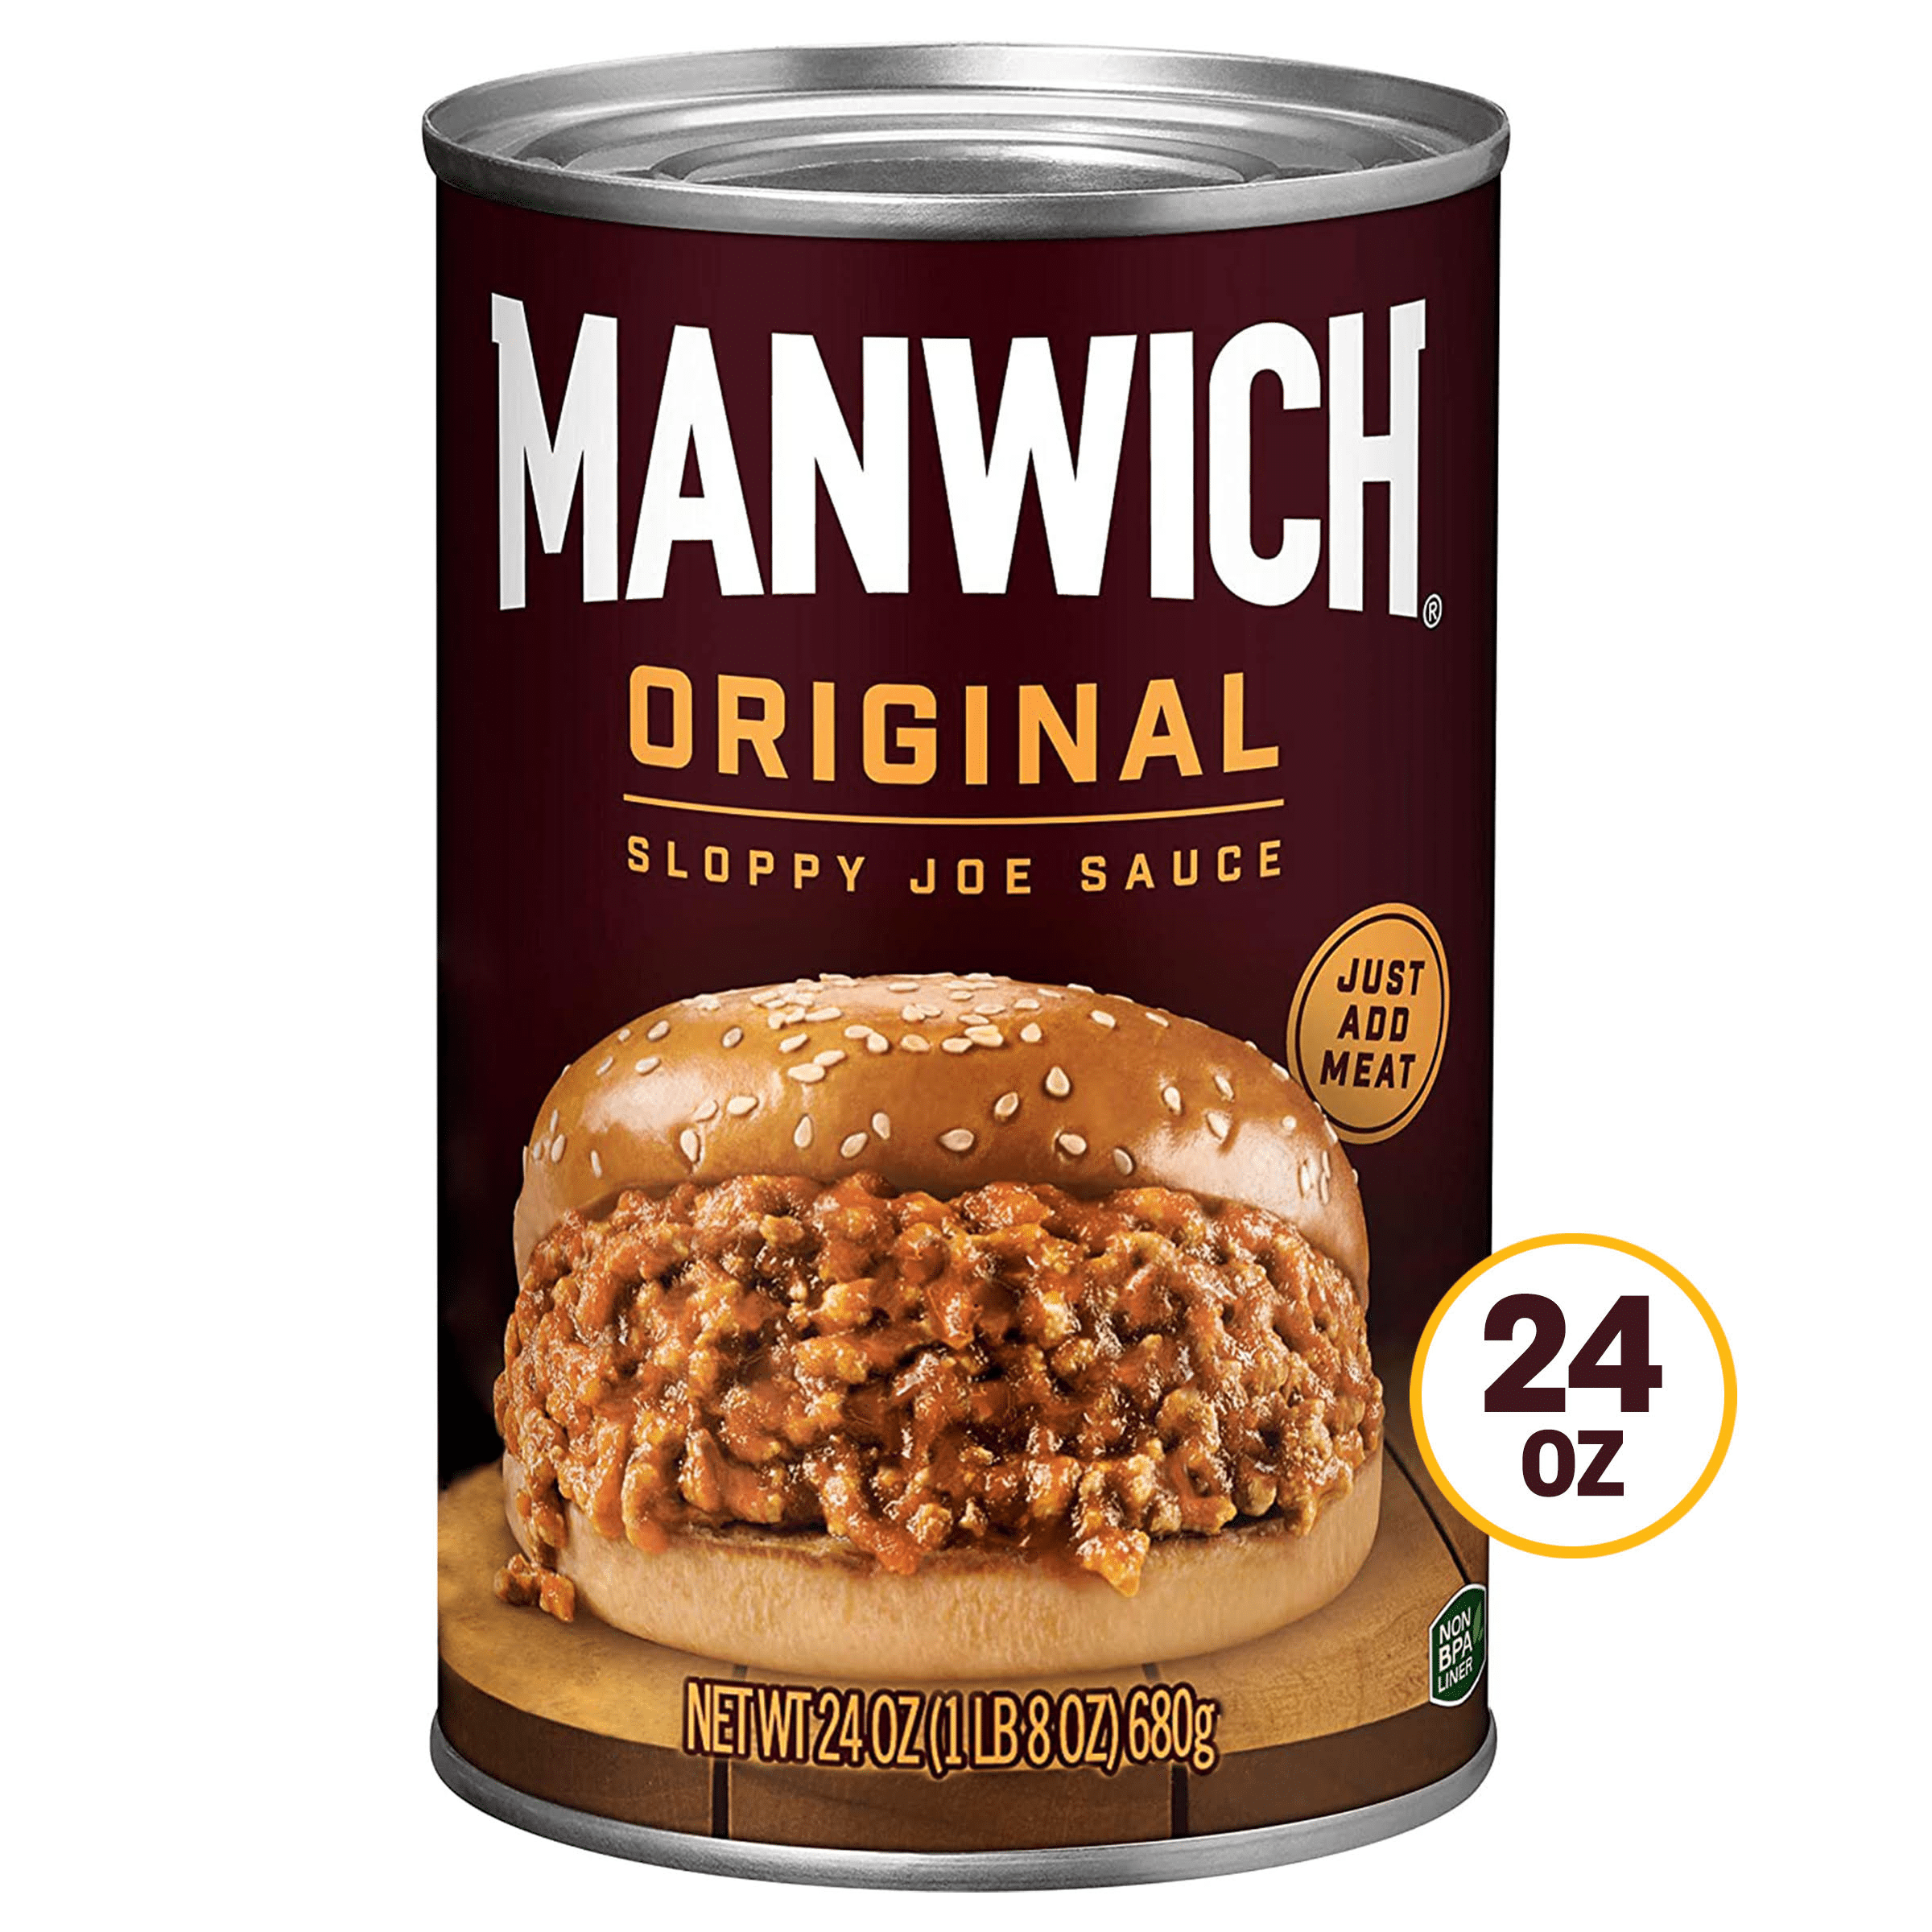 Manwich Original Sloppy Joe Sauce, Canned Sauce, 24 OZ